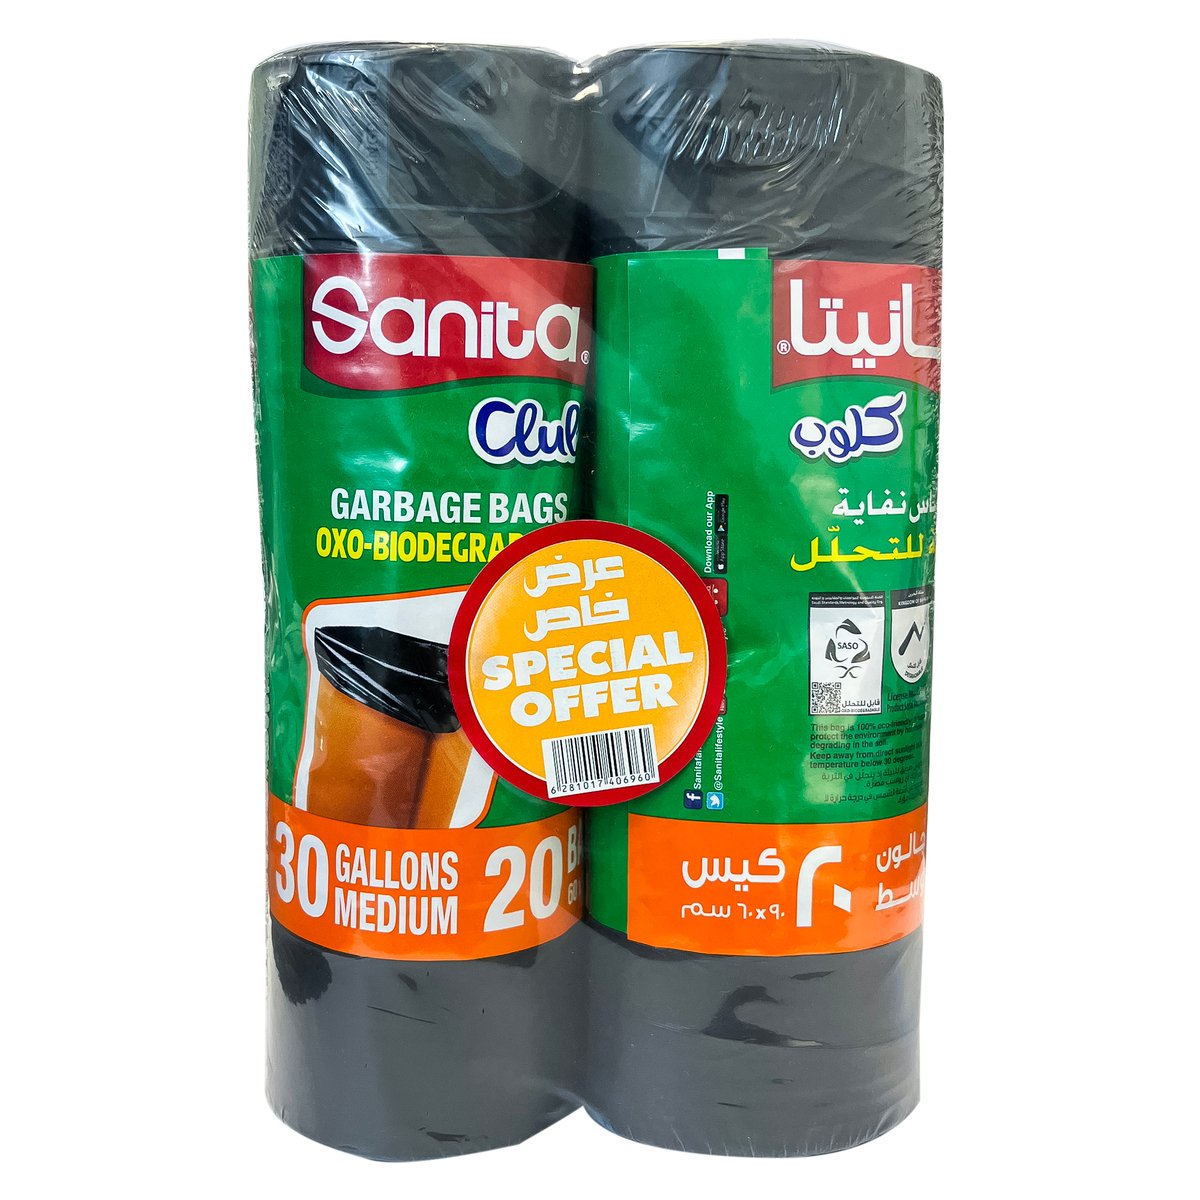 Buy Sanita Garbage Bags Oxo-Biodegradable 30 Gallons Size Medium Value Pack 2 x 20pcs Online at Best Price | Buy More Save More | Lulu UAE in UAE